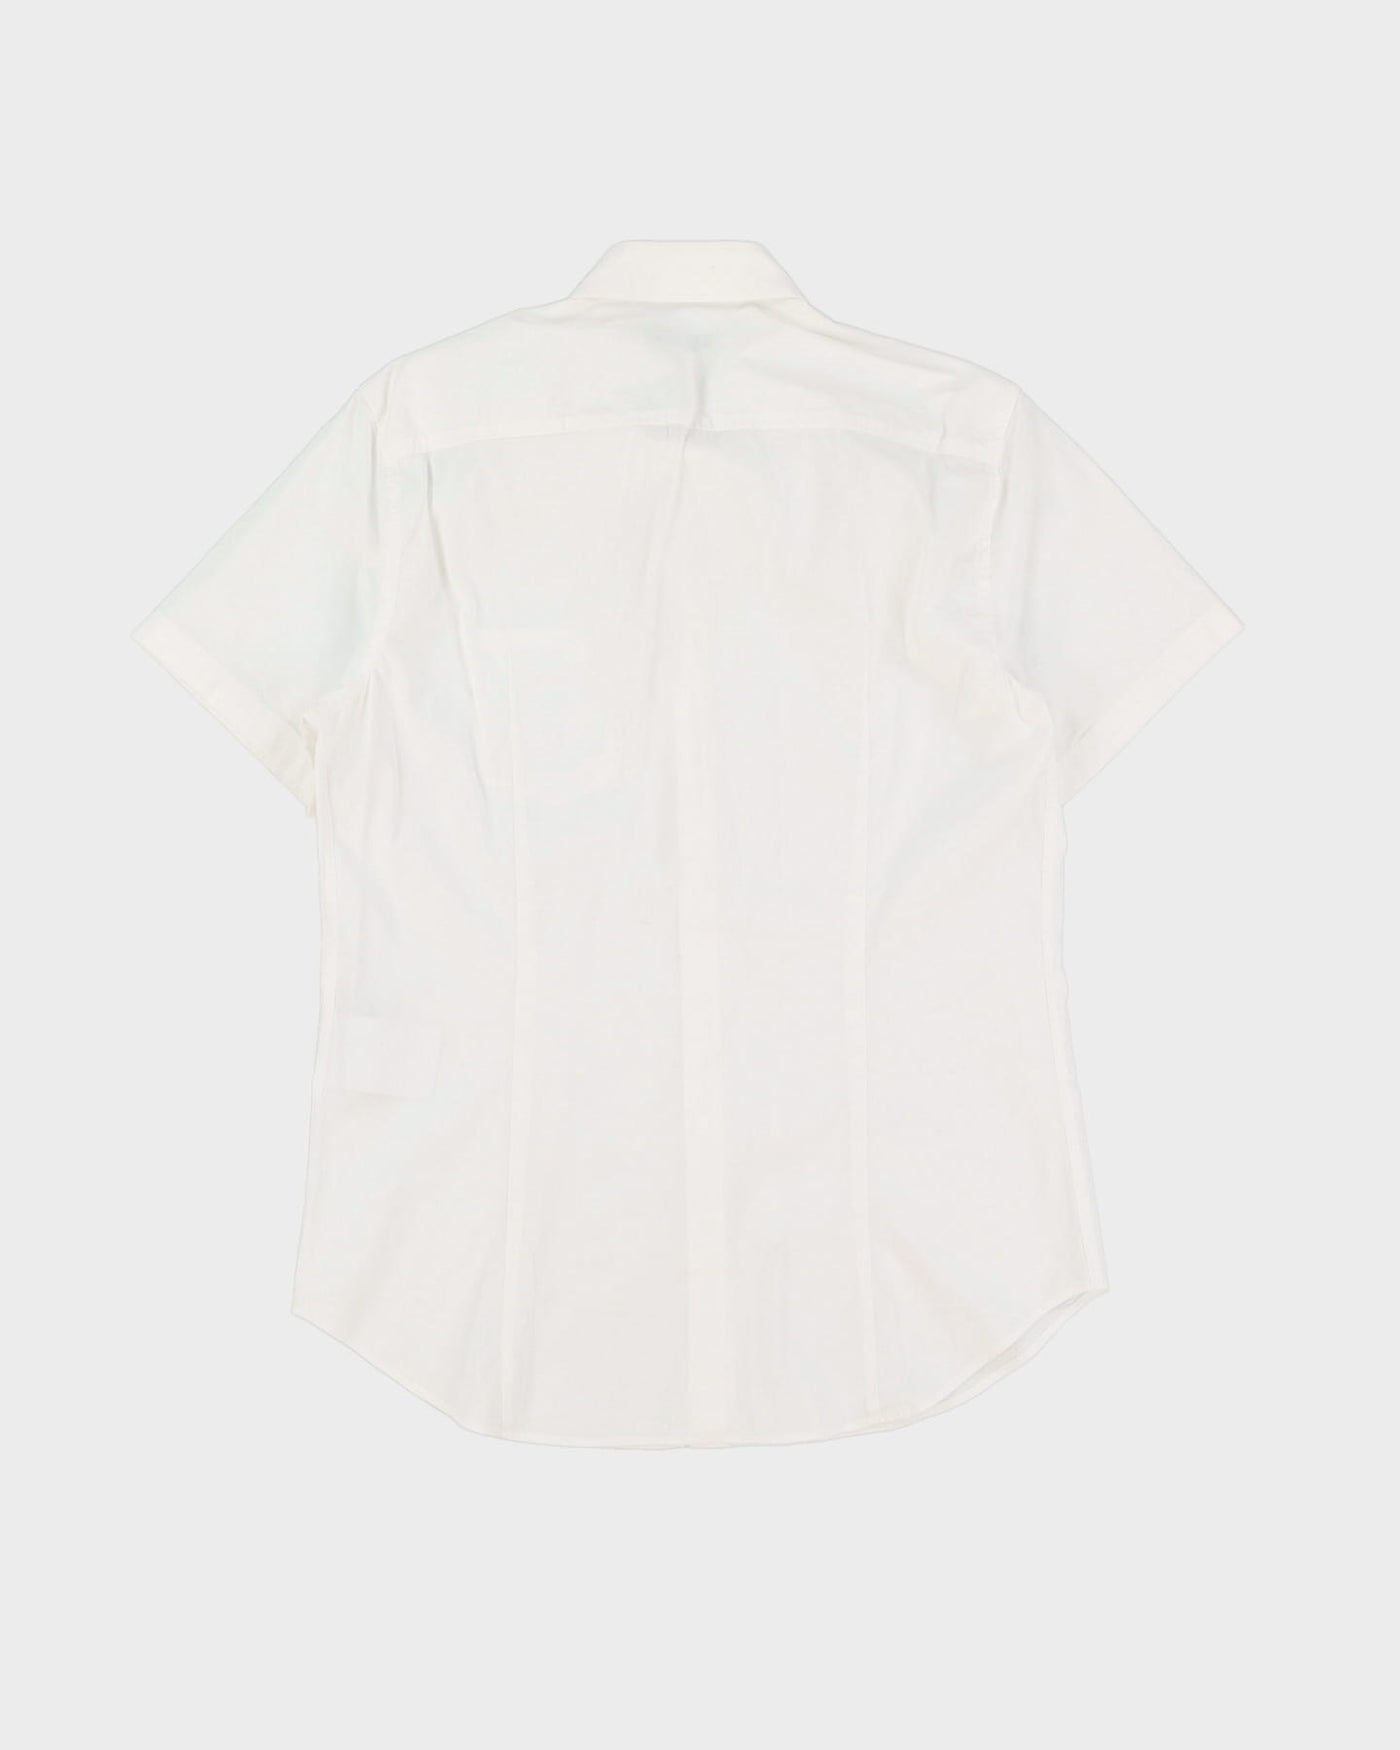 Versace Jeans White Short Sleeve Shirt - M